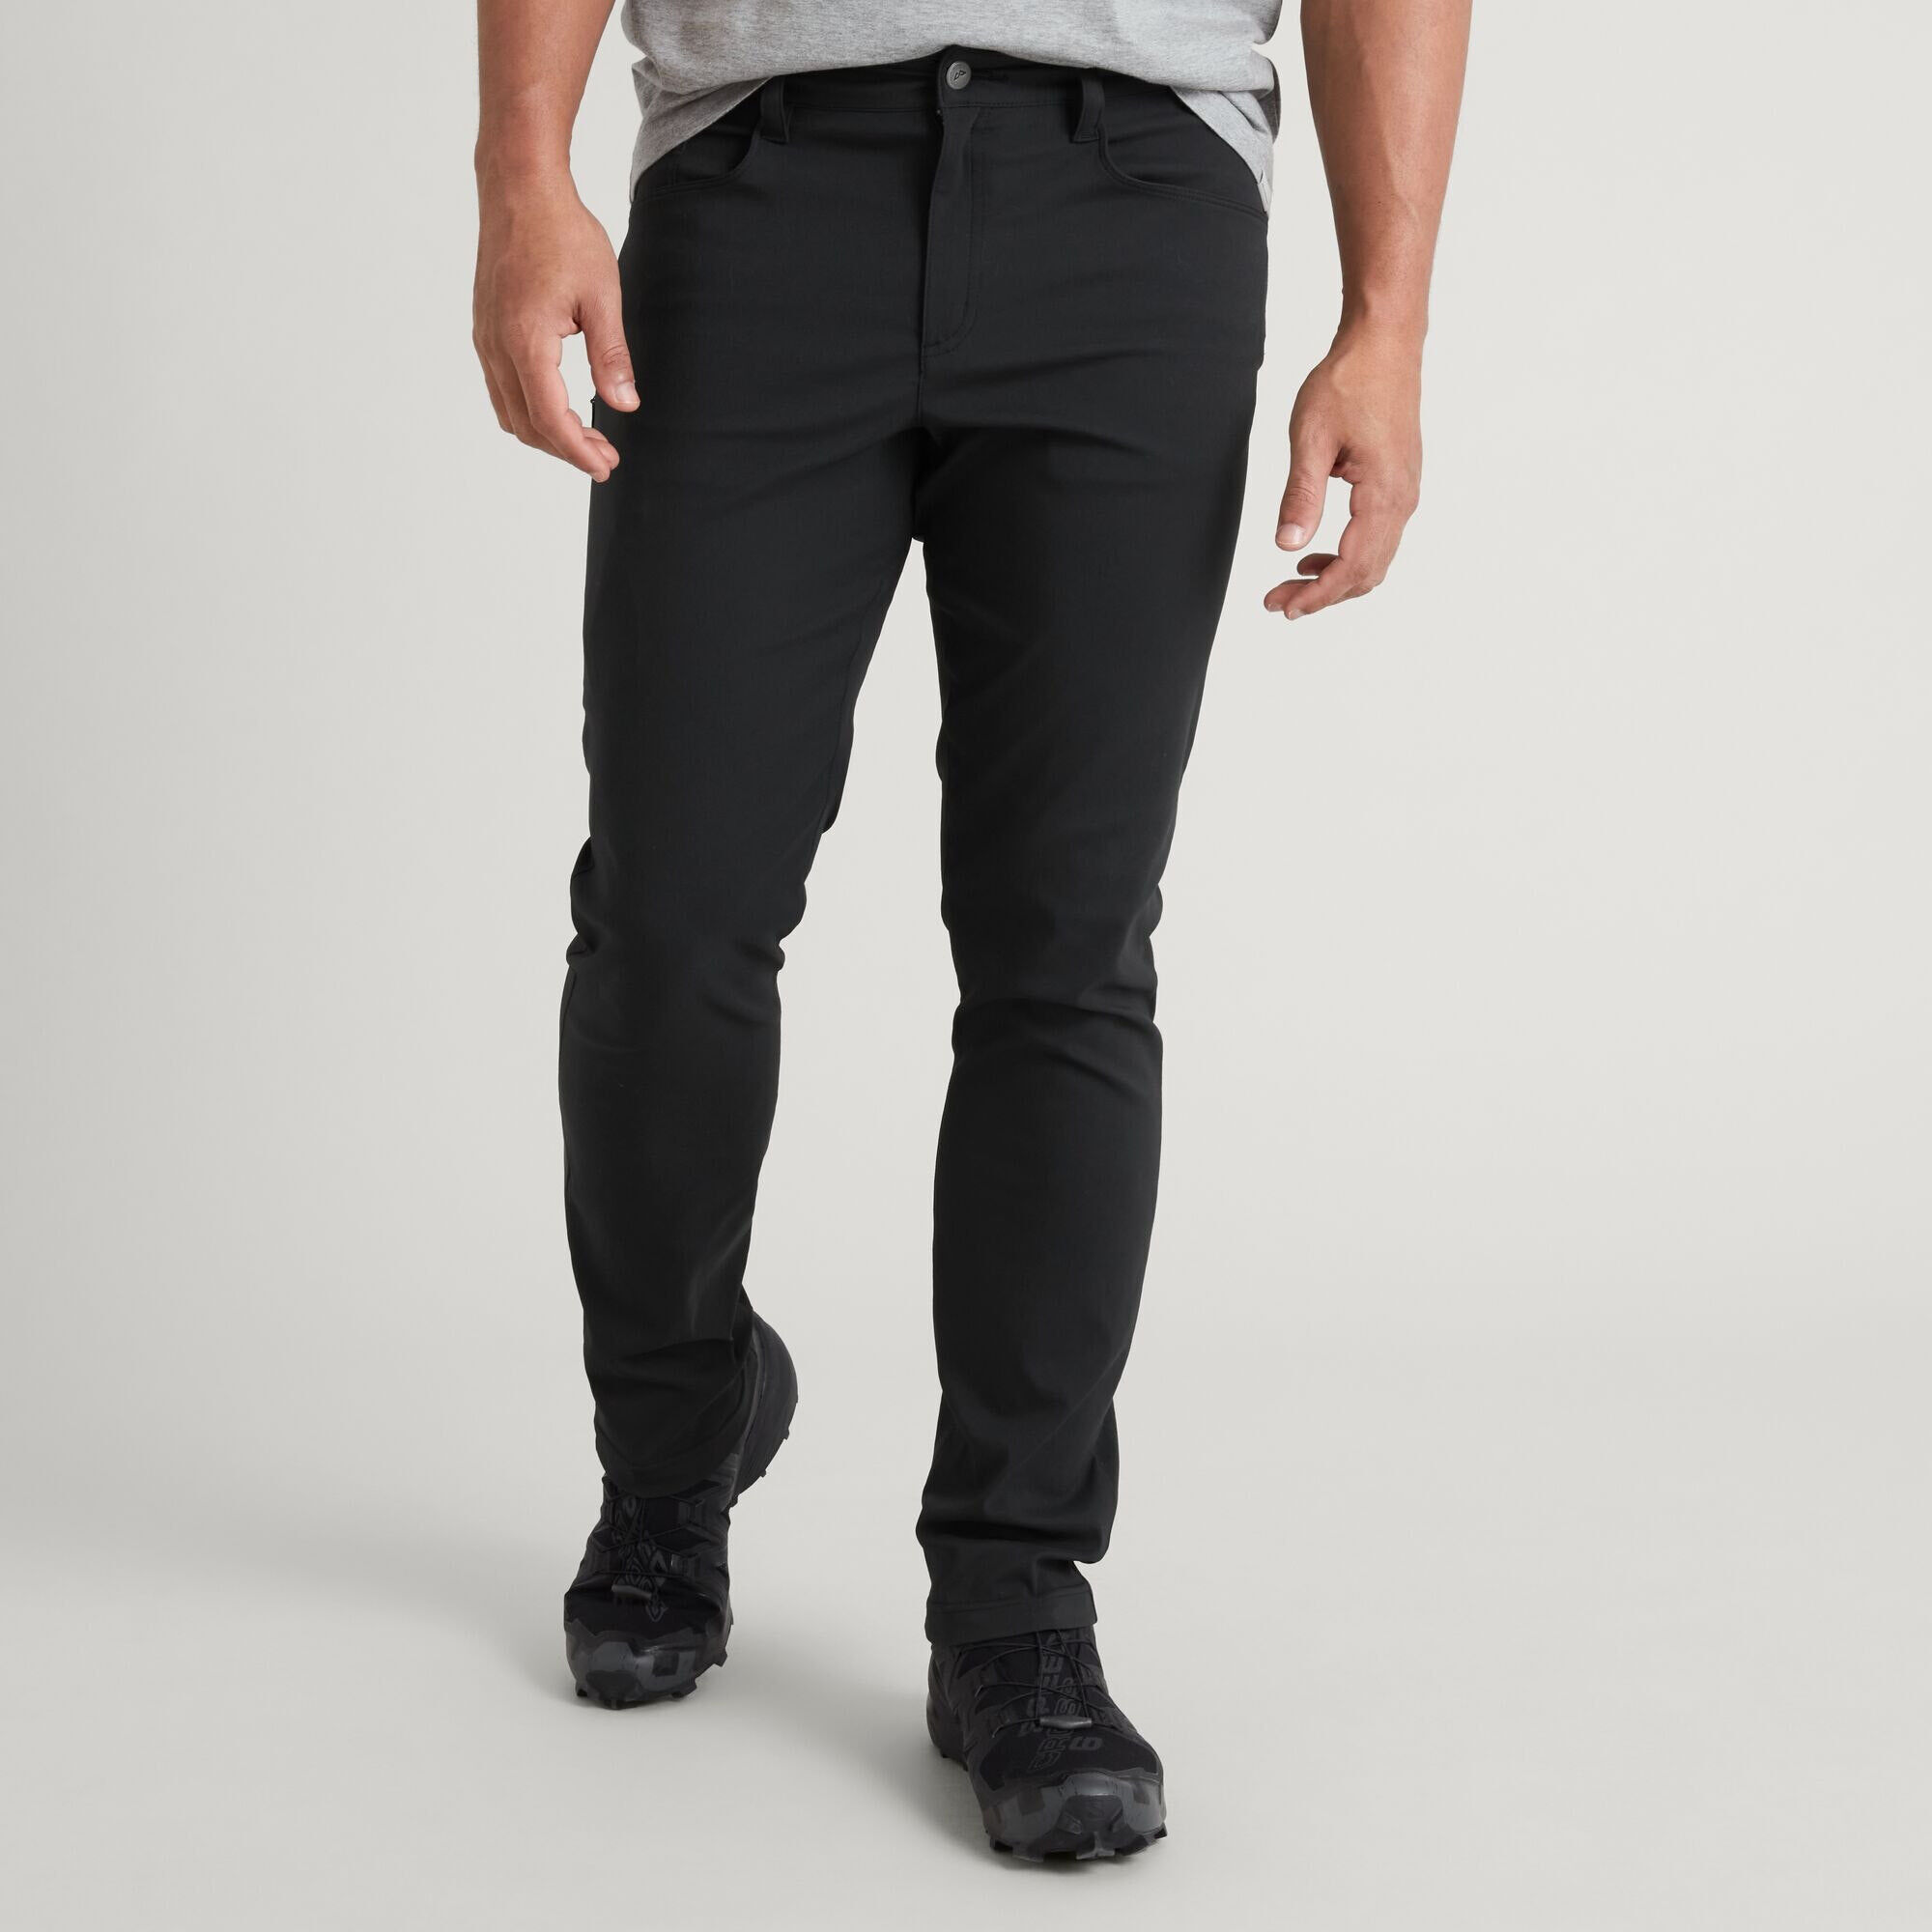 Kathmandu Flight Pants V2 - Walking trousers - Men's | Hardloop